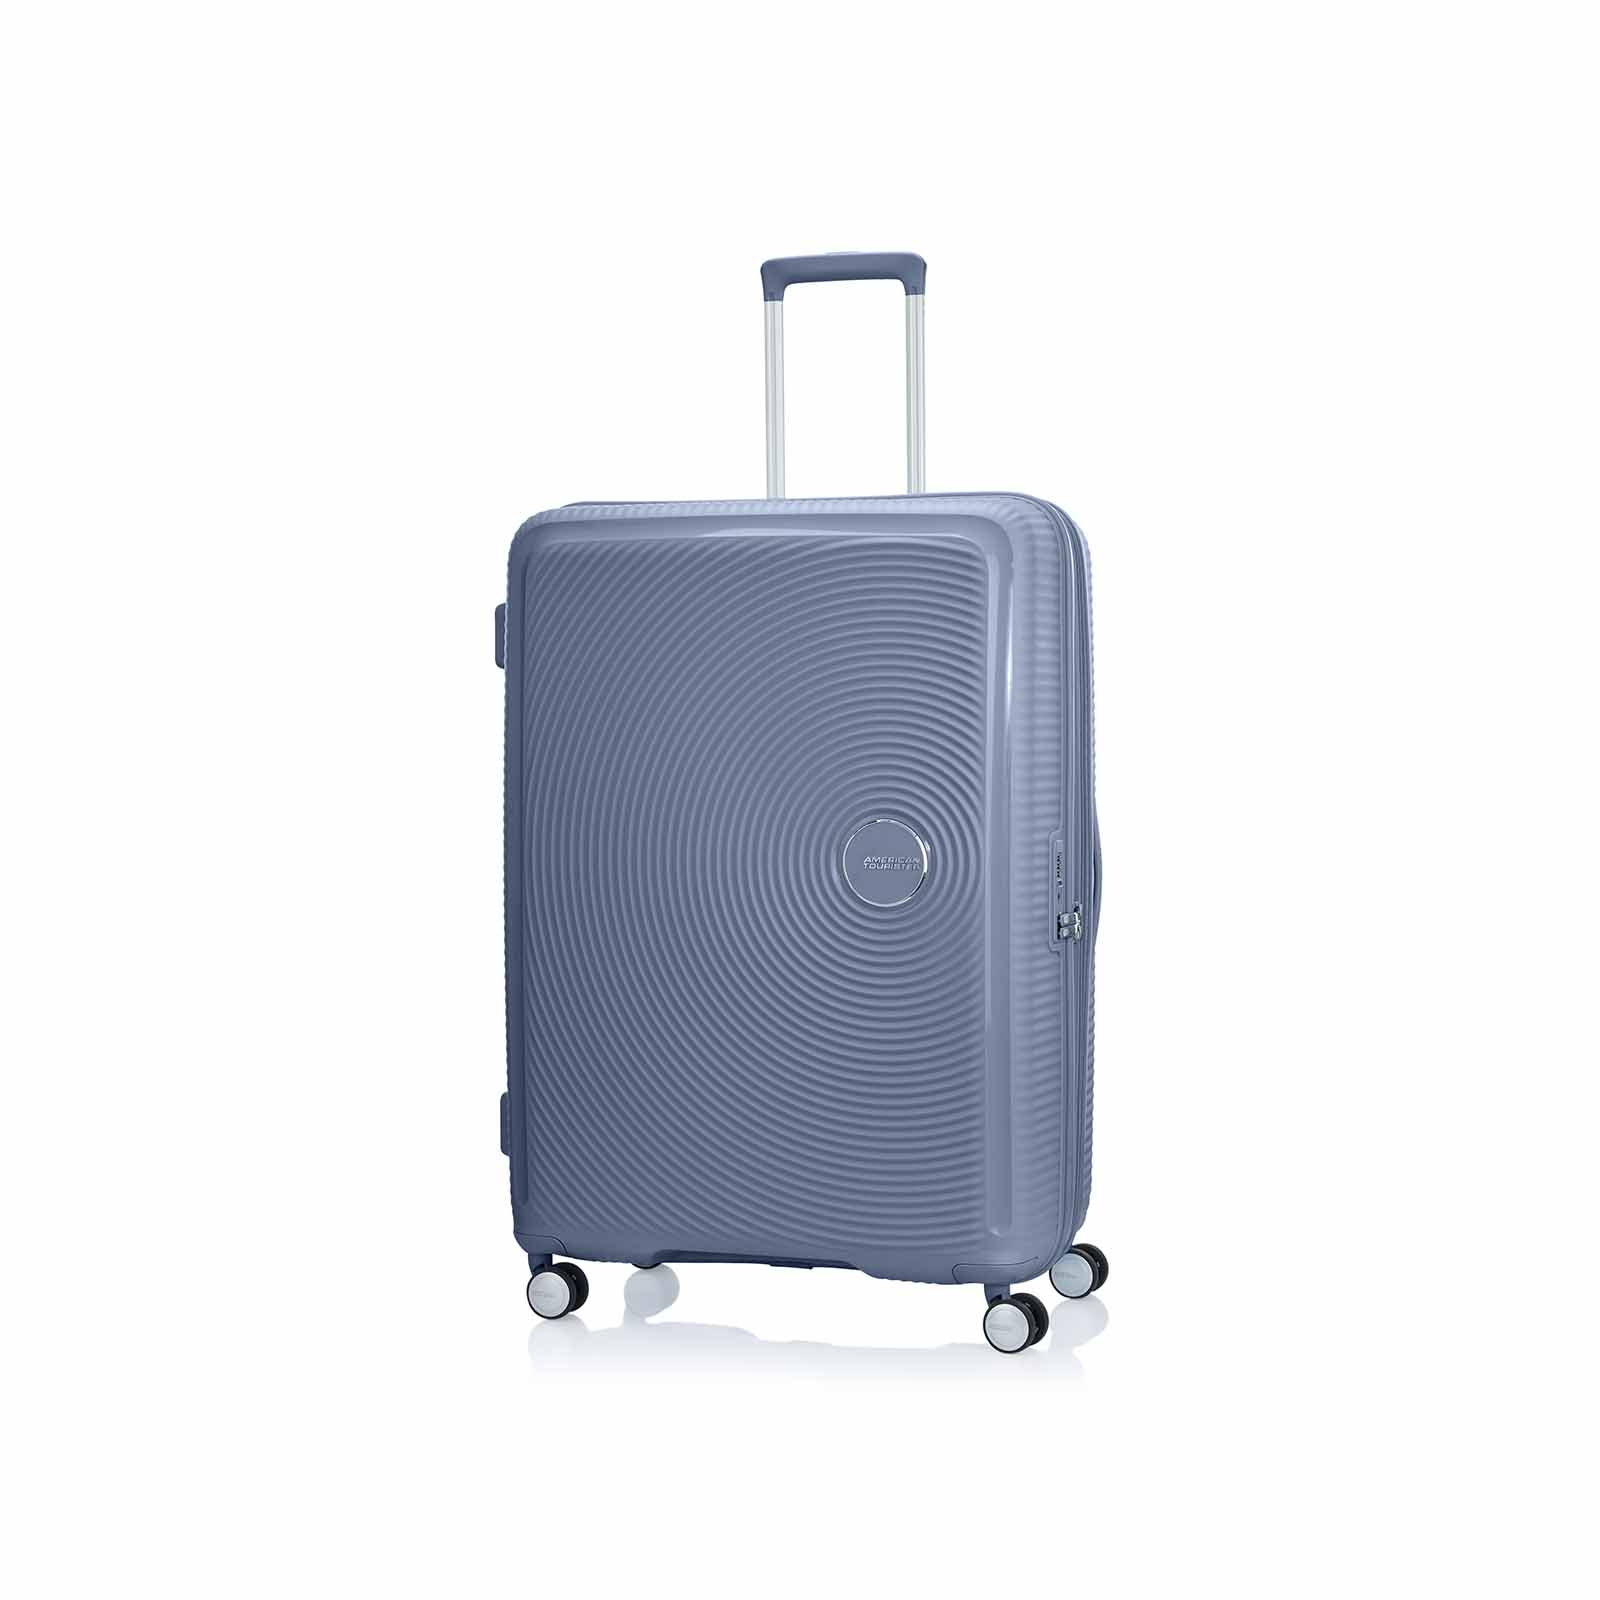 American-Tourister-Curio-2-80cm-Suitcase-Stone-Blue-Angle